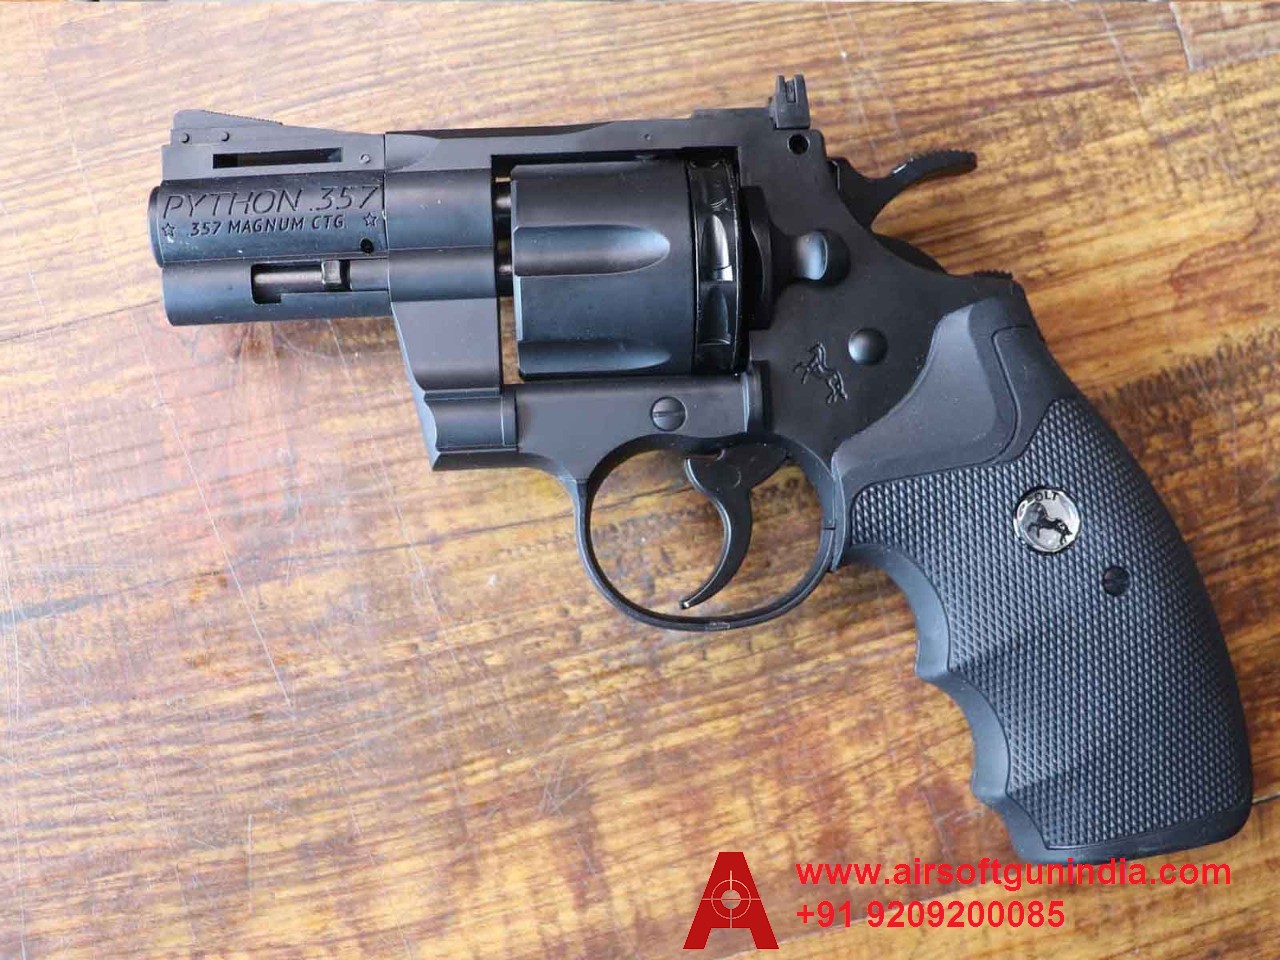 UMAREX Colt Python 357 Pellet And BB .177Cal, 4.5mm Air Revolver By Airsoft Gun India